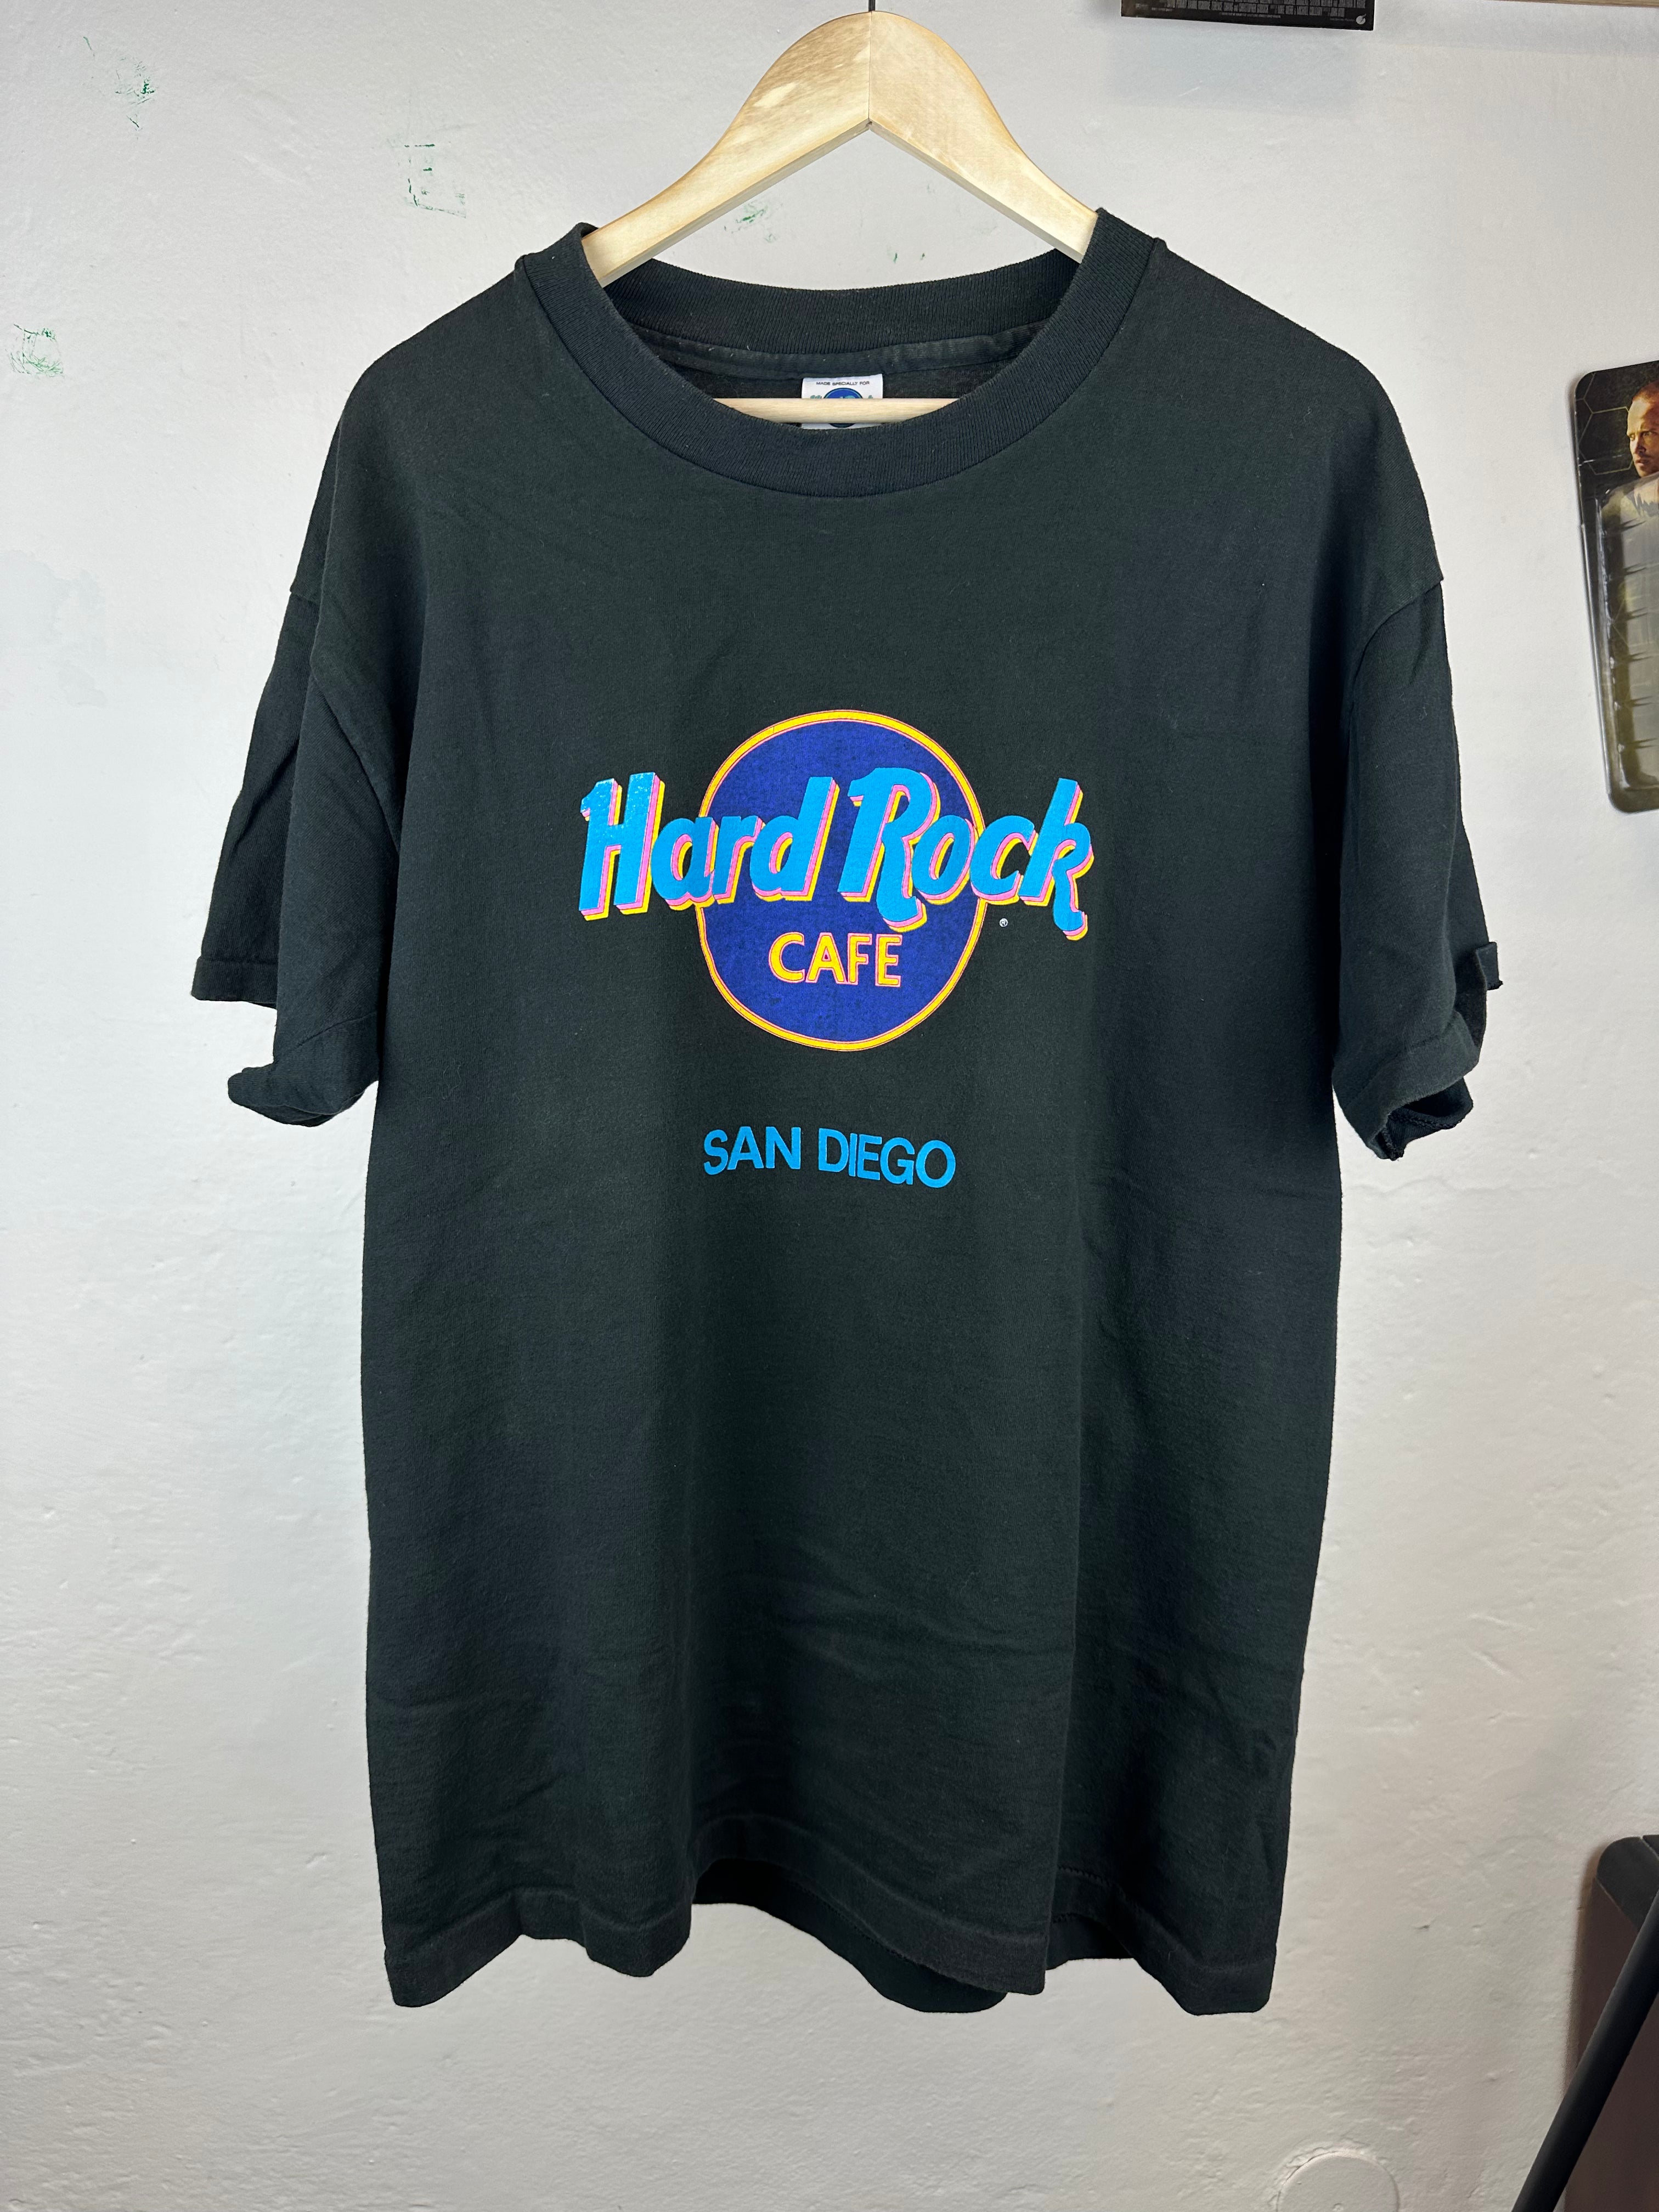 Vintage Hard Rock Cafe "San Diego" 90s t-shirt - size XL